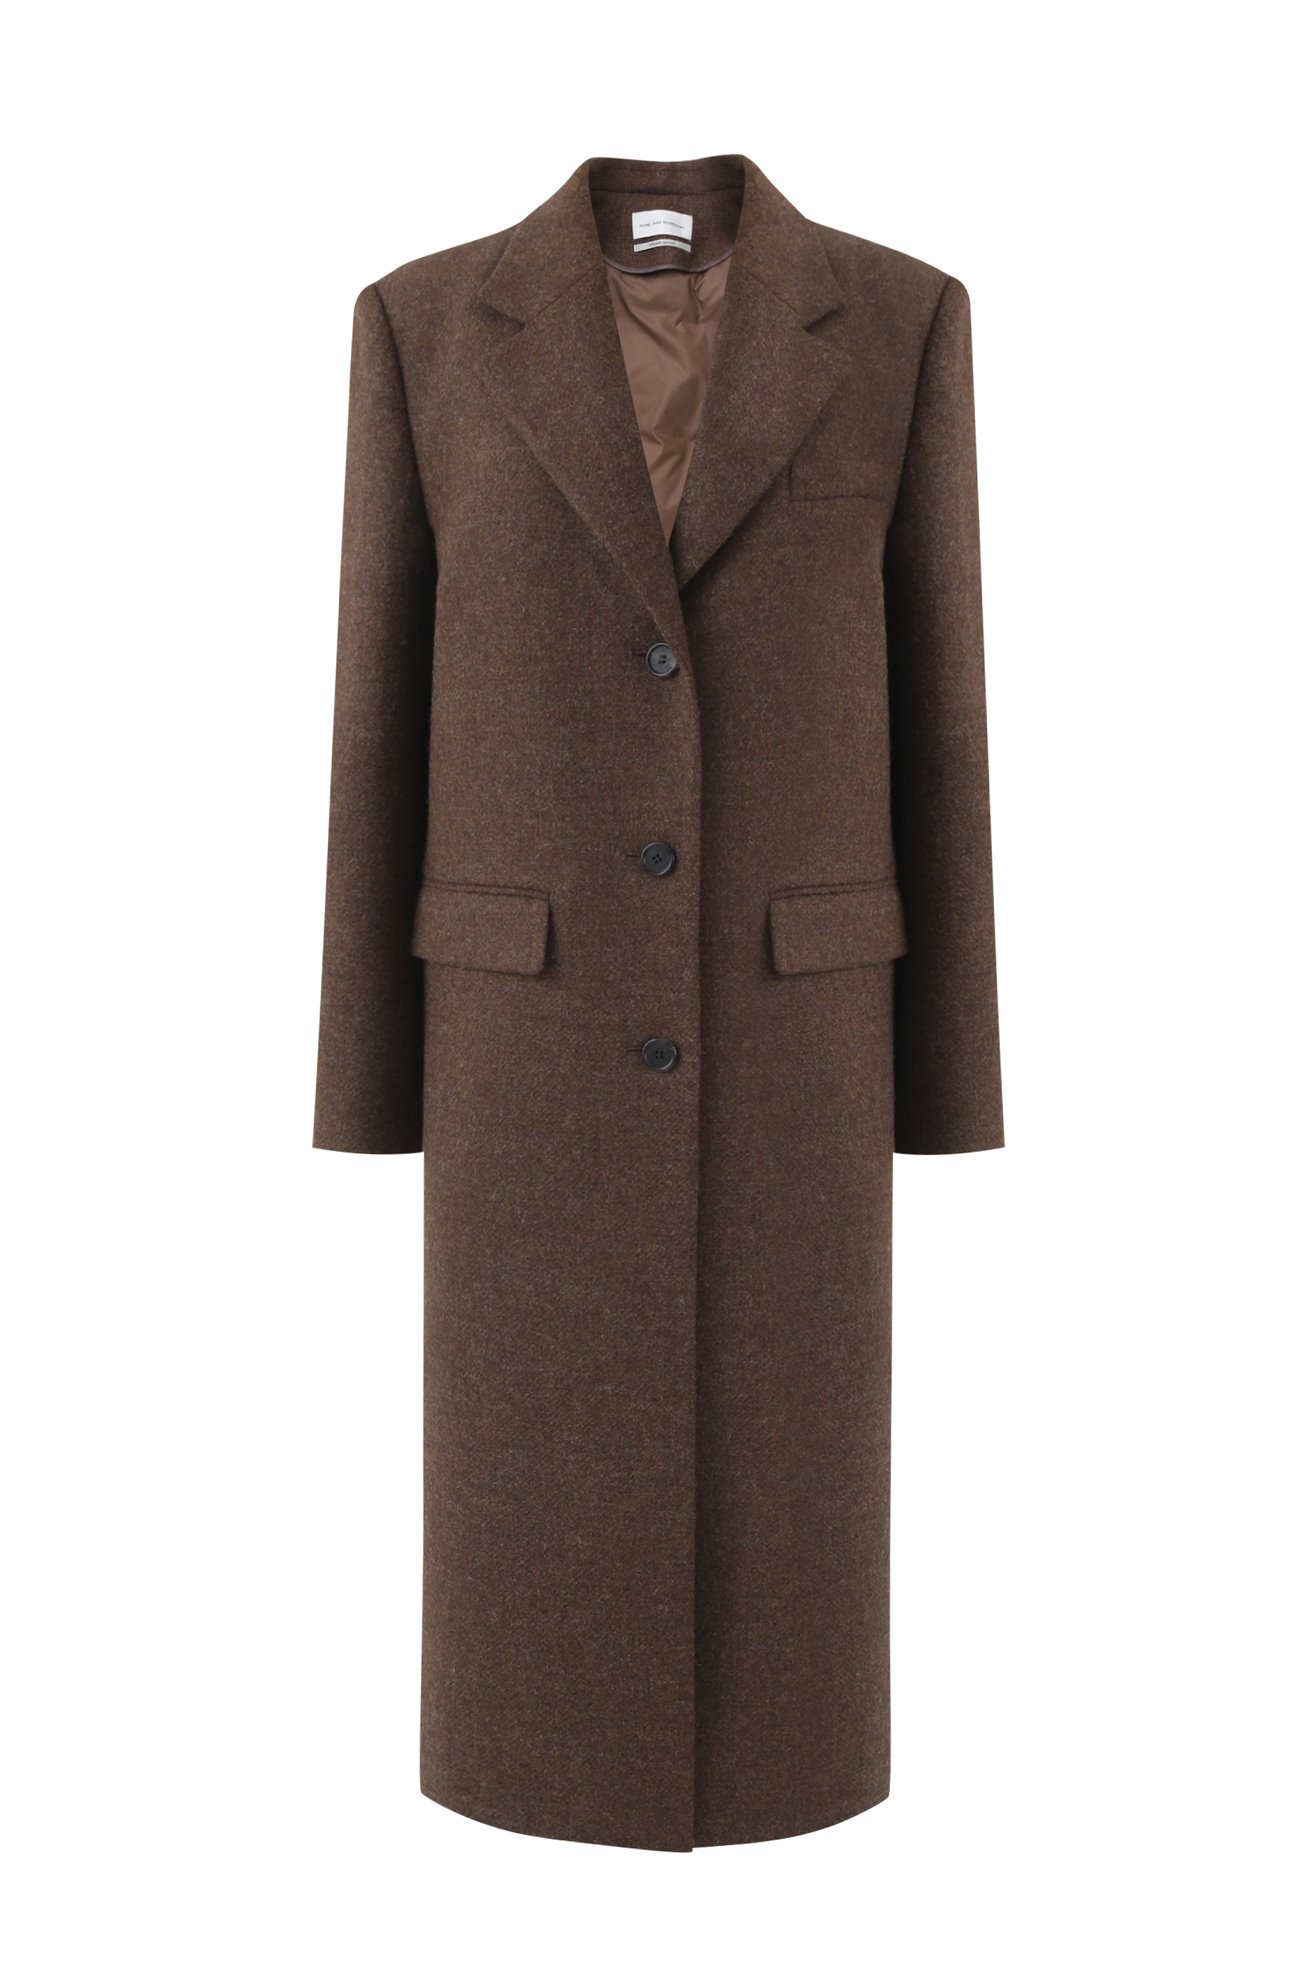 British Wool Coat with Detachable Duck Down Vest (BROWN)ATELIER EDITION 